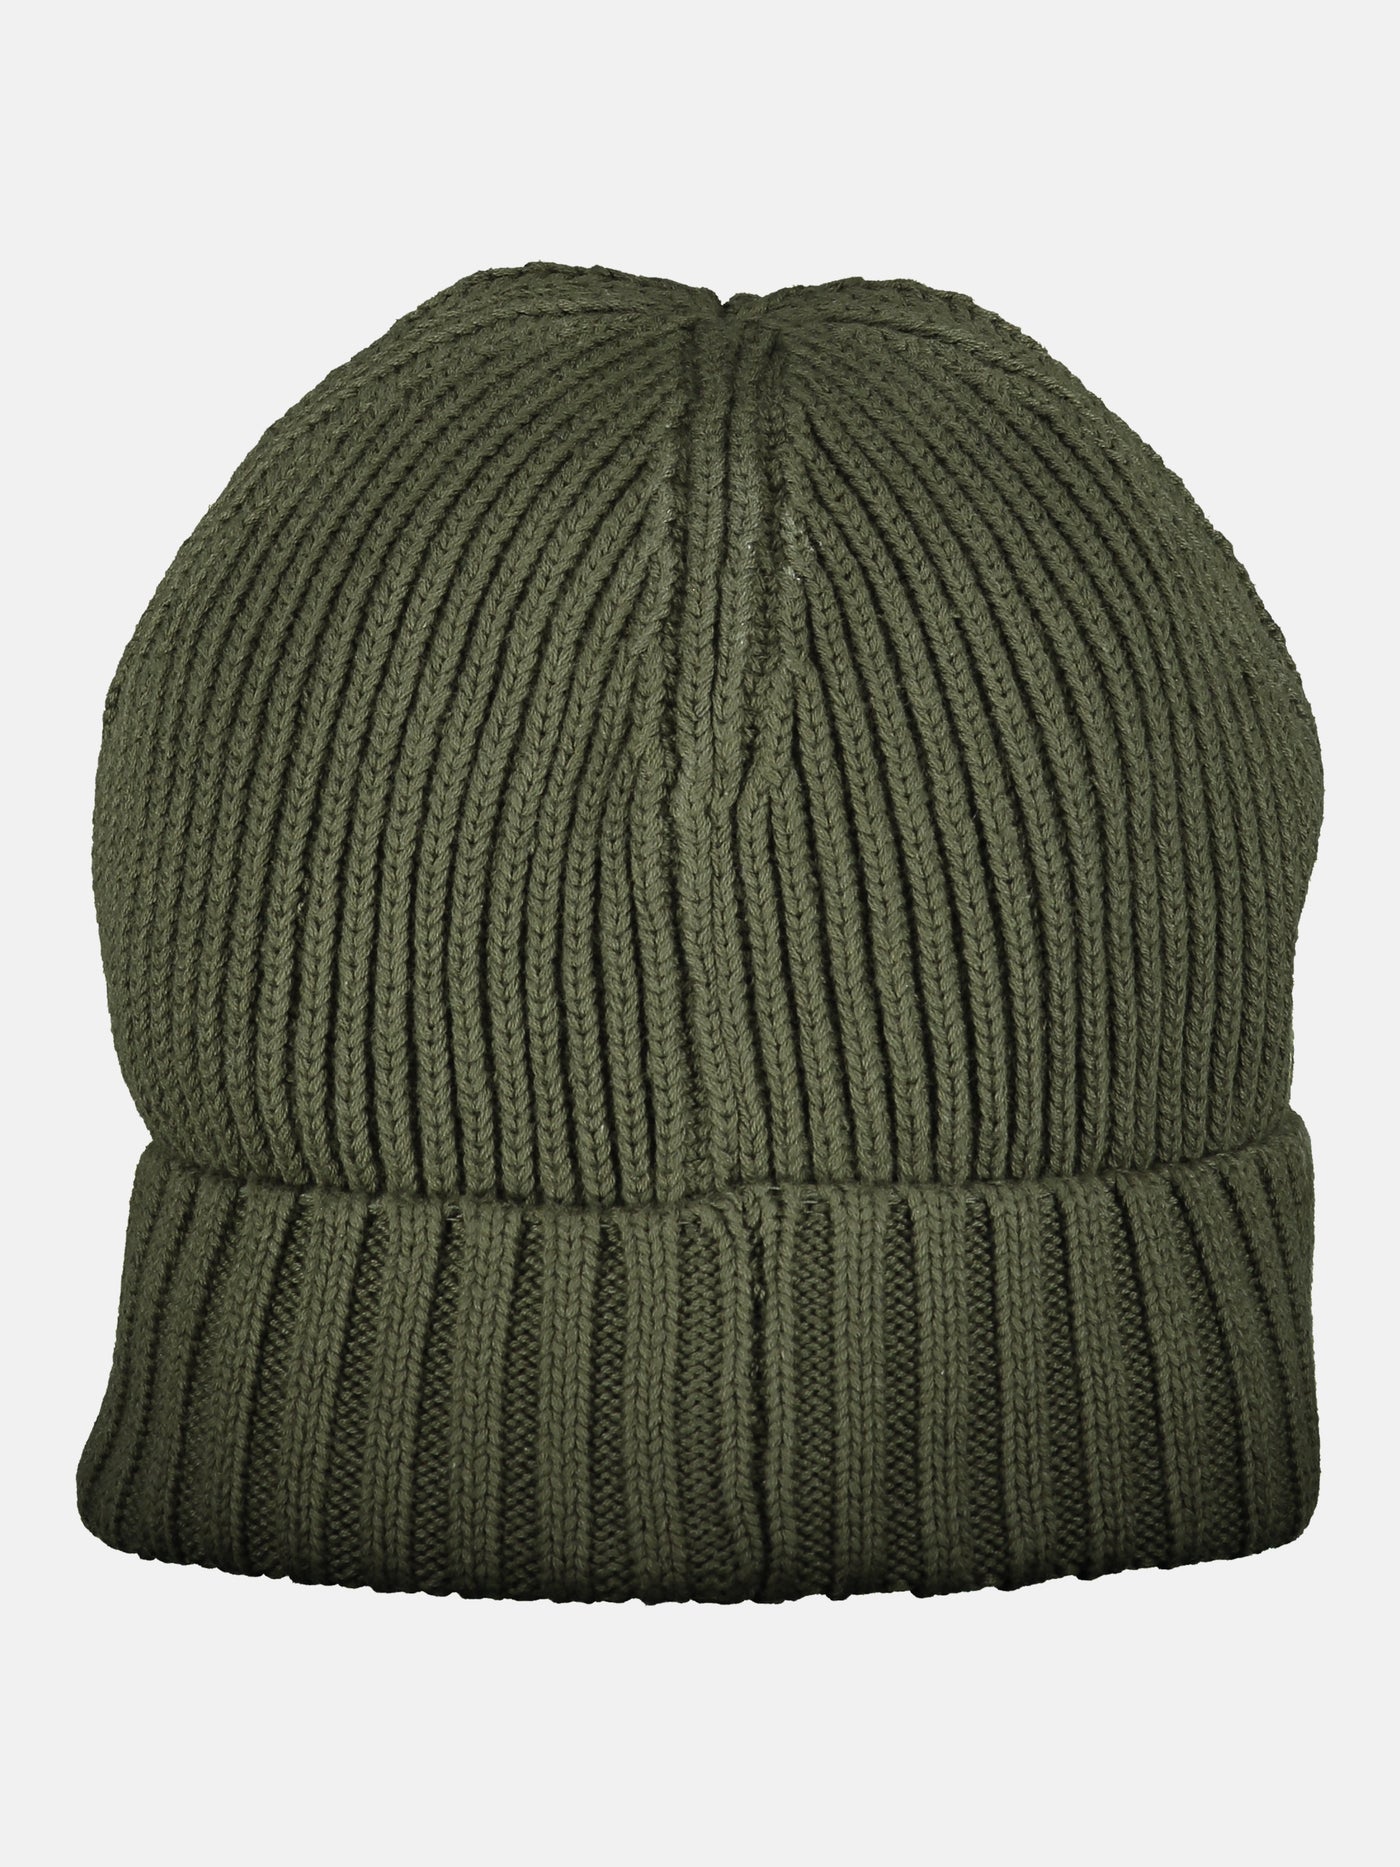 Classic knit hat